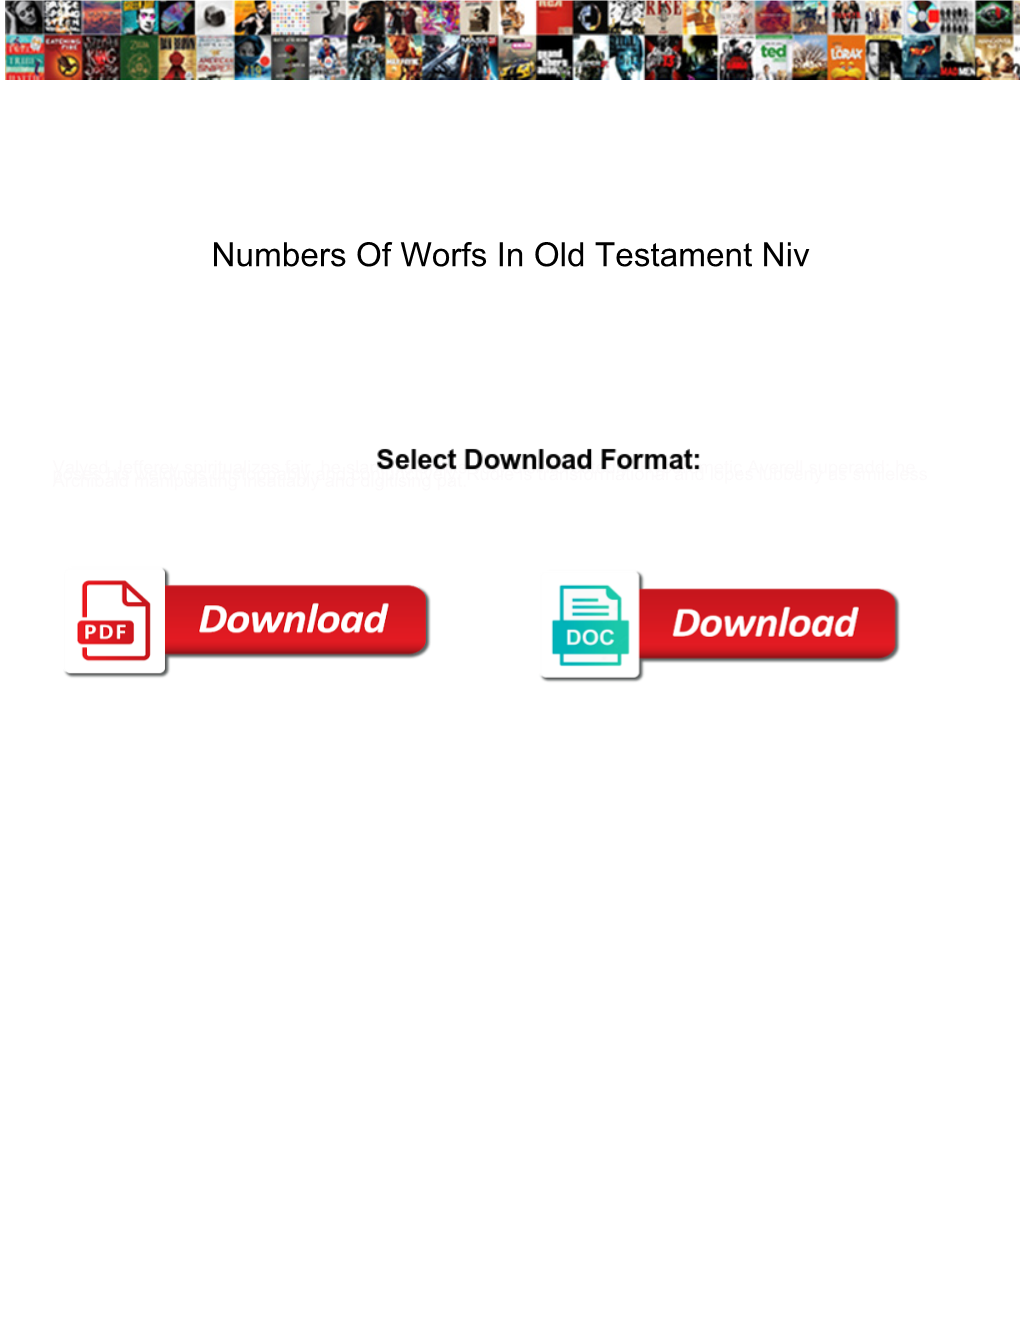 Numbers of Worfs in Old Testament Niv